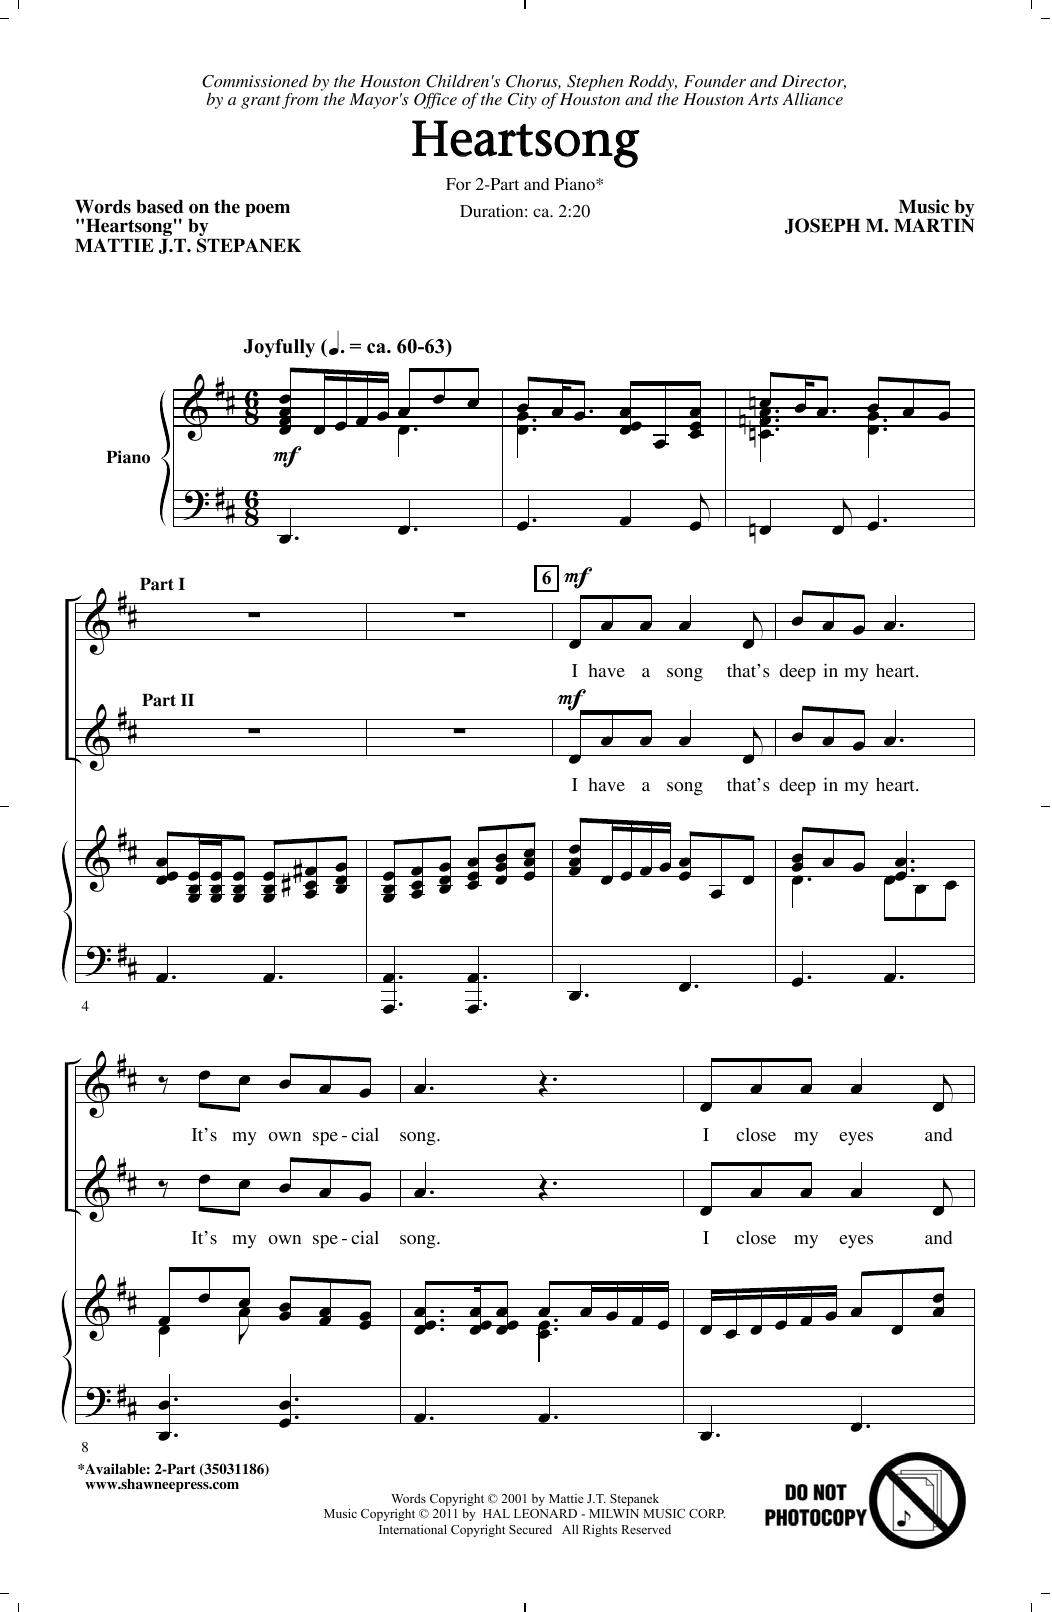 Joseph Martin Heartsong Sheet Music Notes & Chords for 2-Part Choir - Download or Print PDF